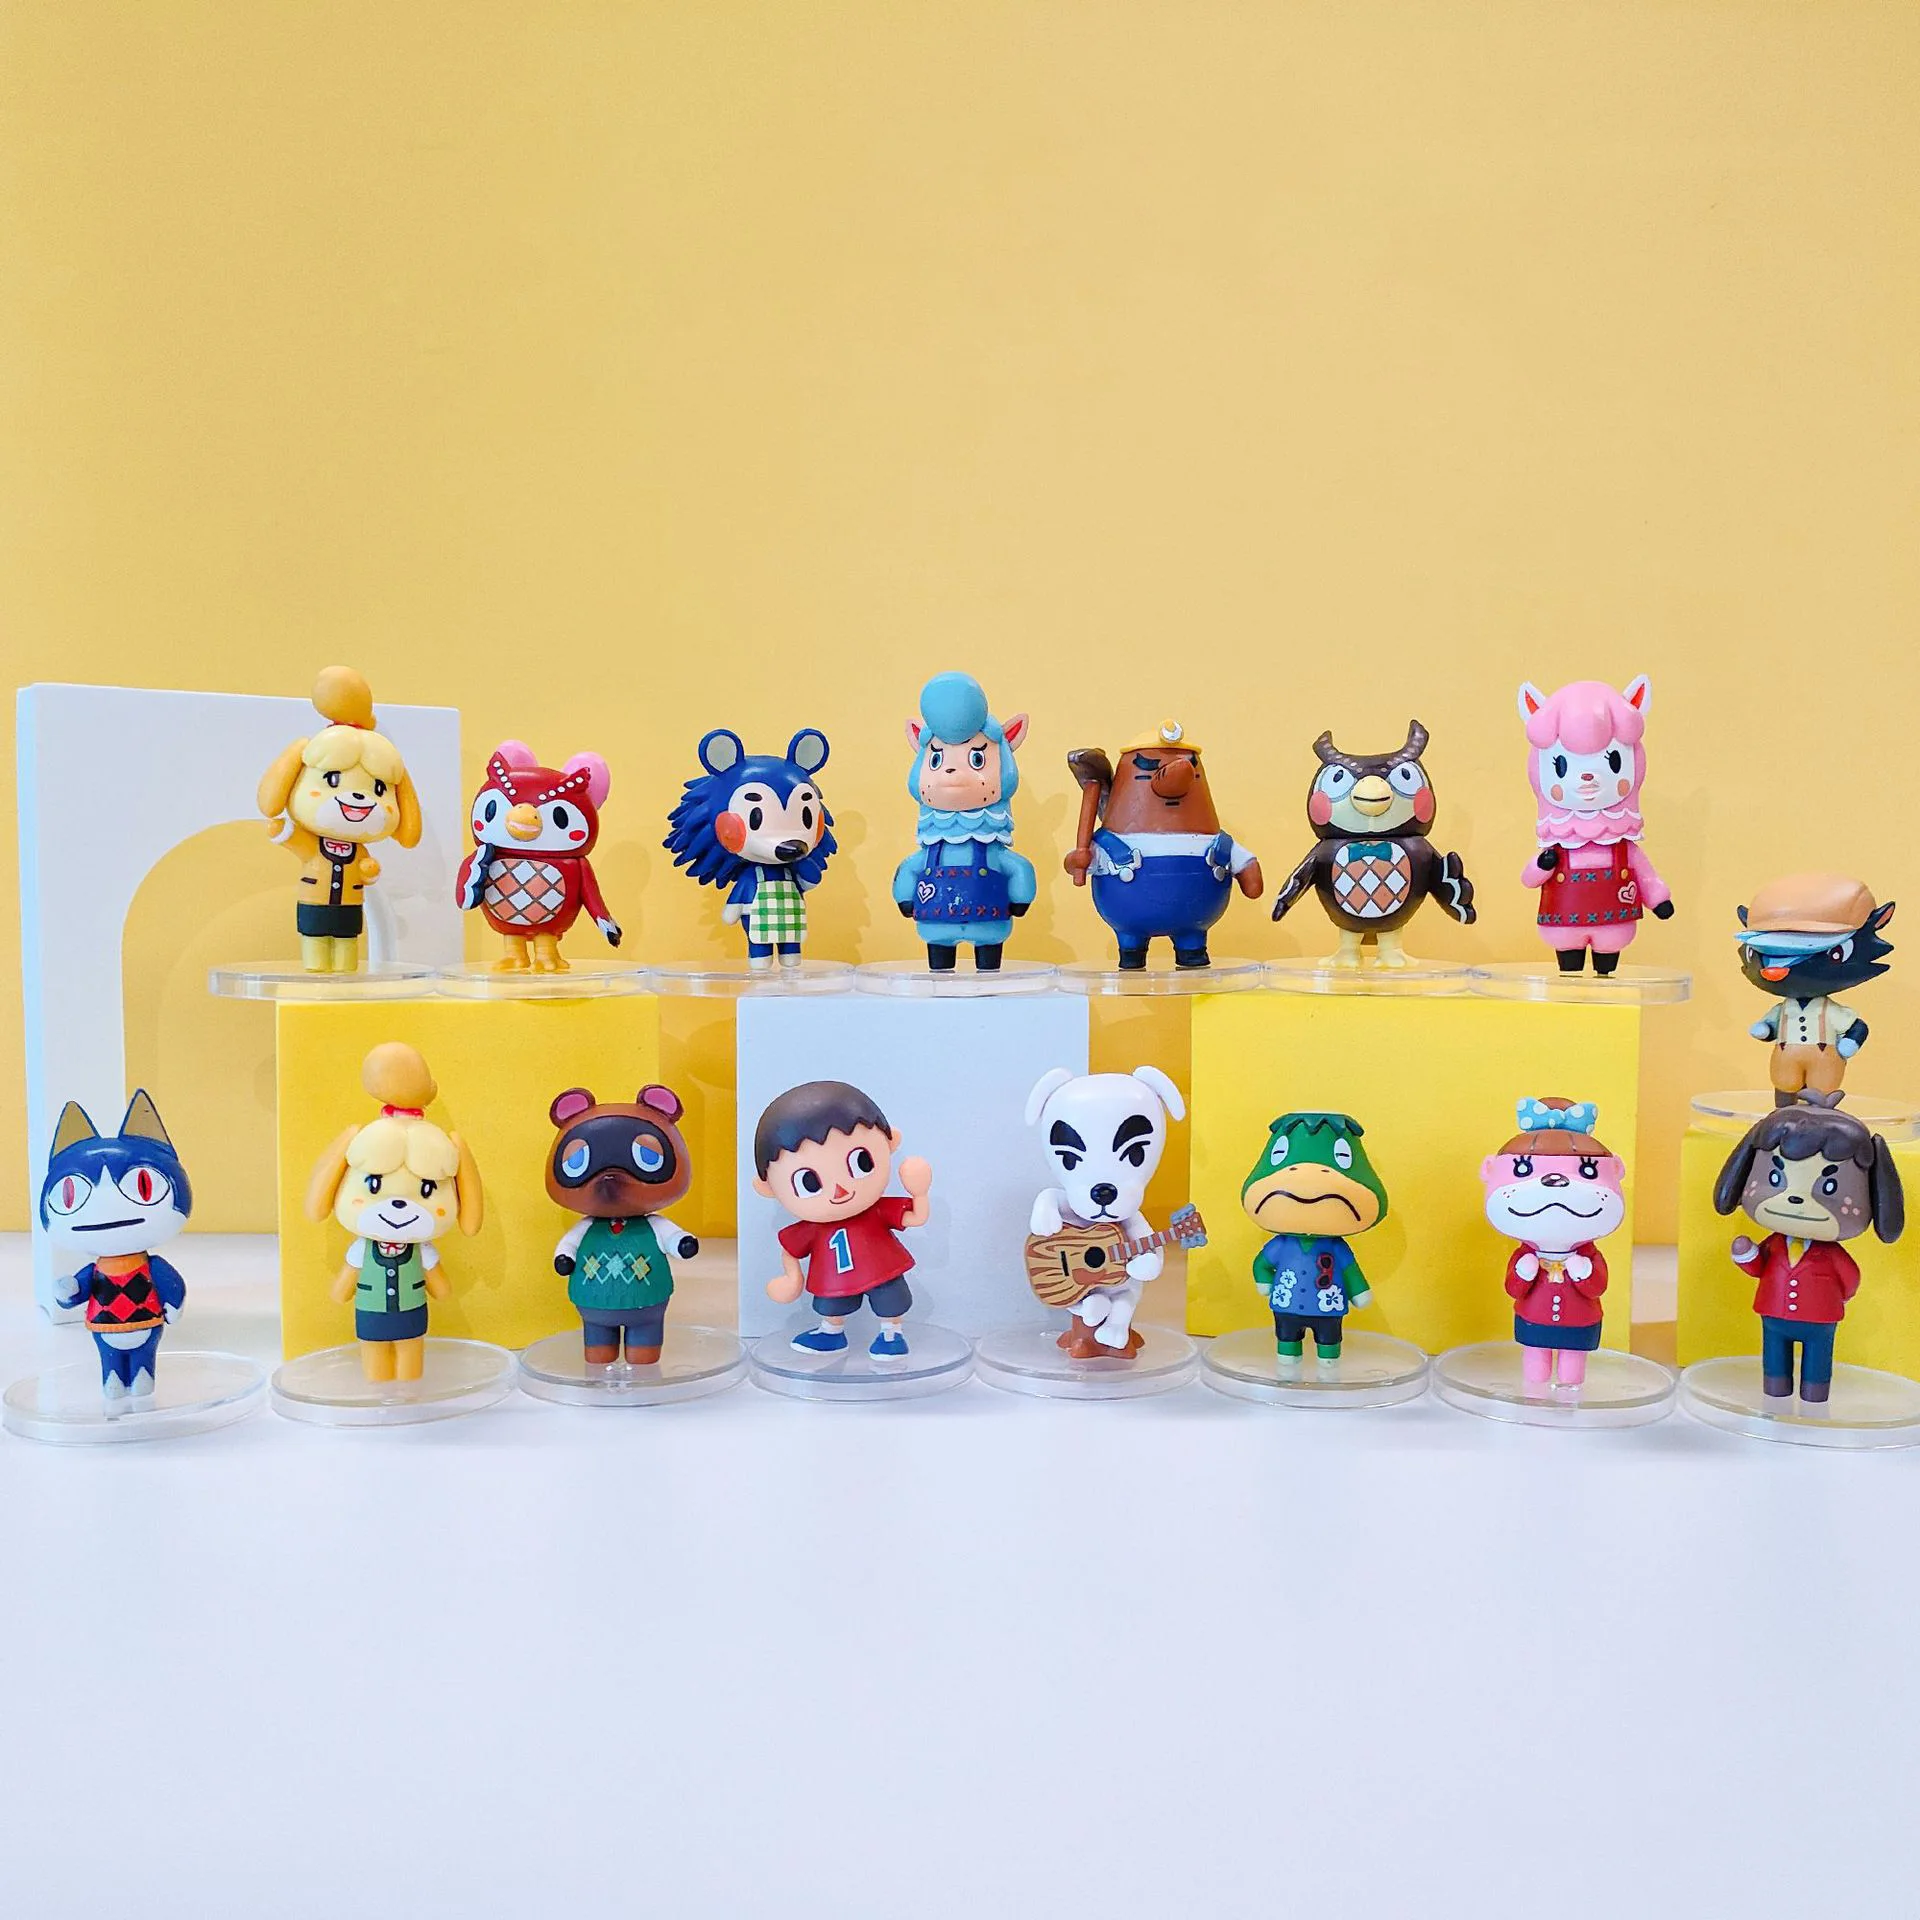 

16pcs/set Animal Crossing Anime Figures Toys PVC Action Figure Portrait Isabelle Tom Nook Lisa Collection Model Dolls Toys Gifts